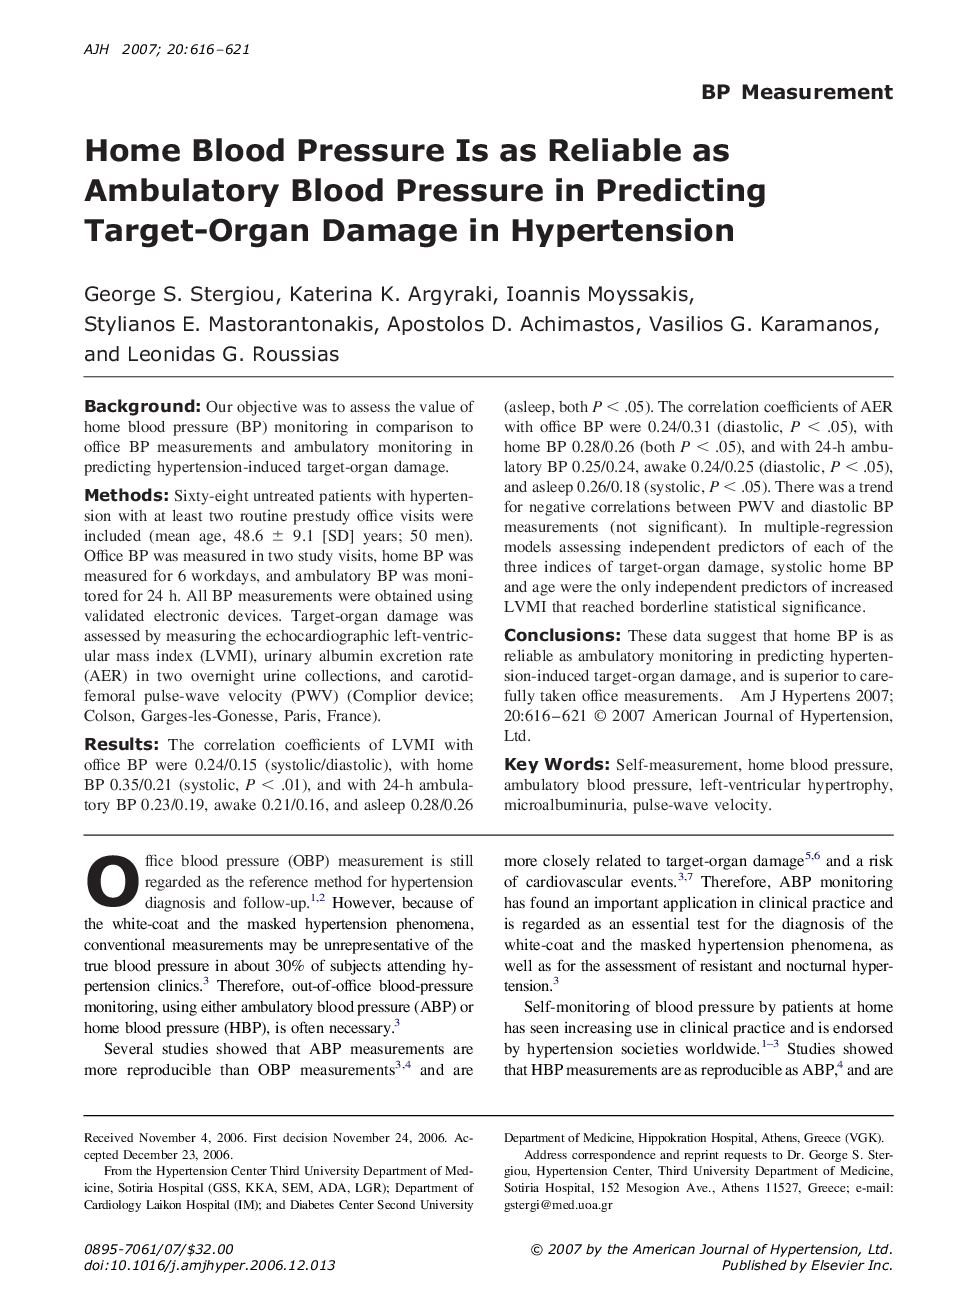 Home Blood Pressure Is as Reliable as Ambulatory Blood Pressure in Predicting Target-Organ Damage in Hypertension